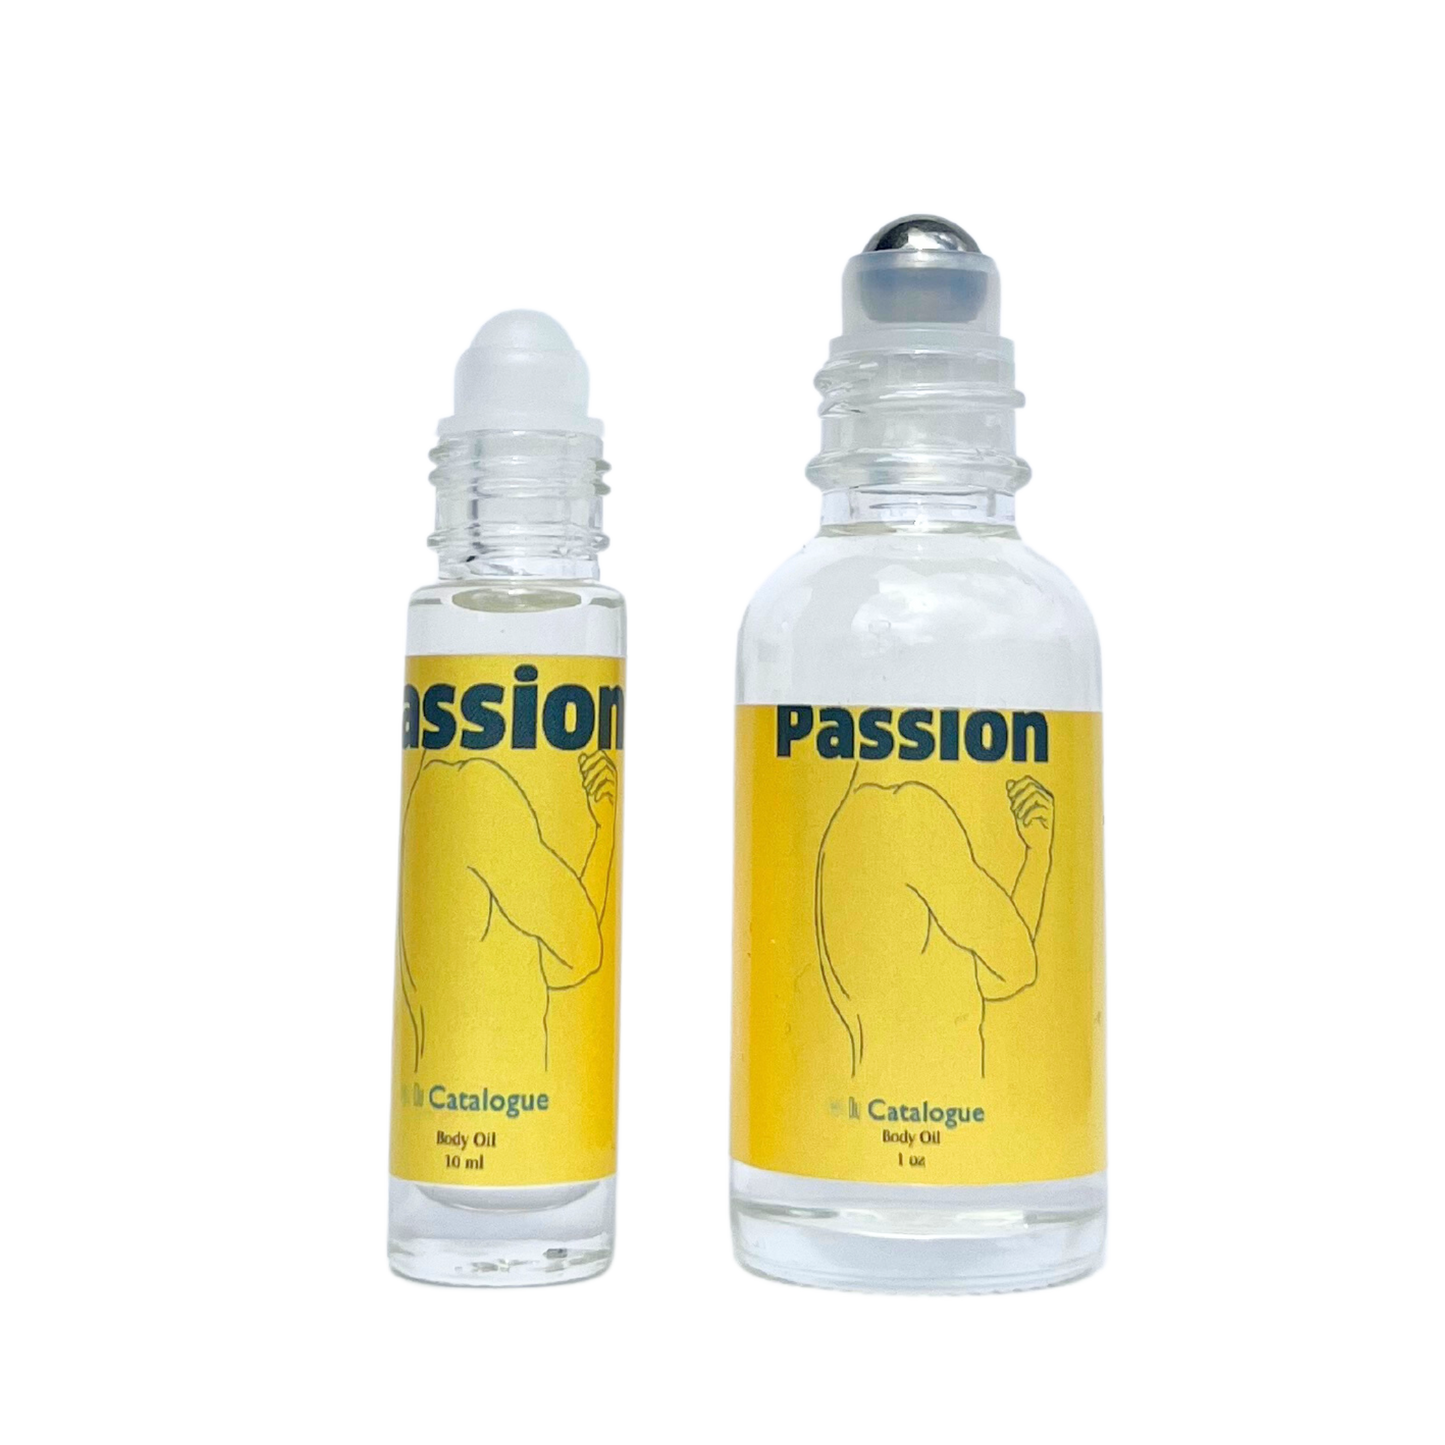 Passion - Cardamom Sea Salt Fresh